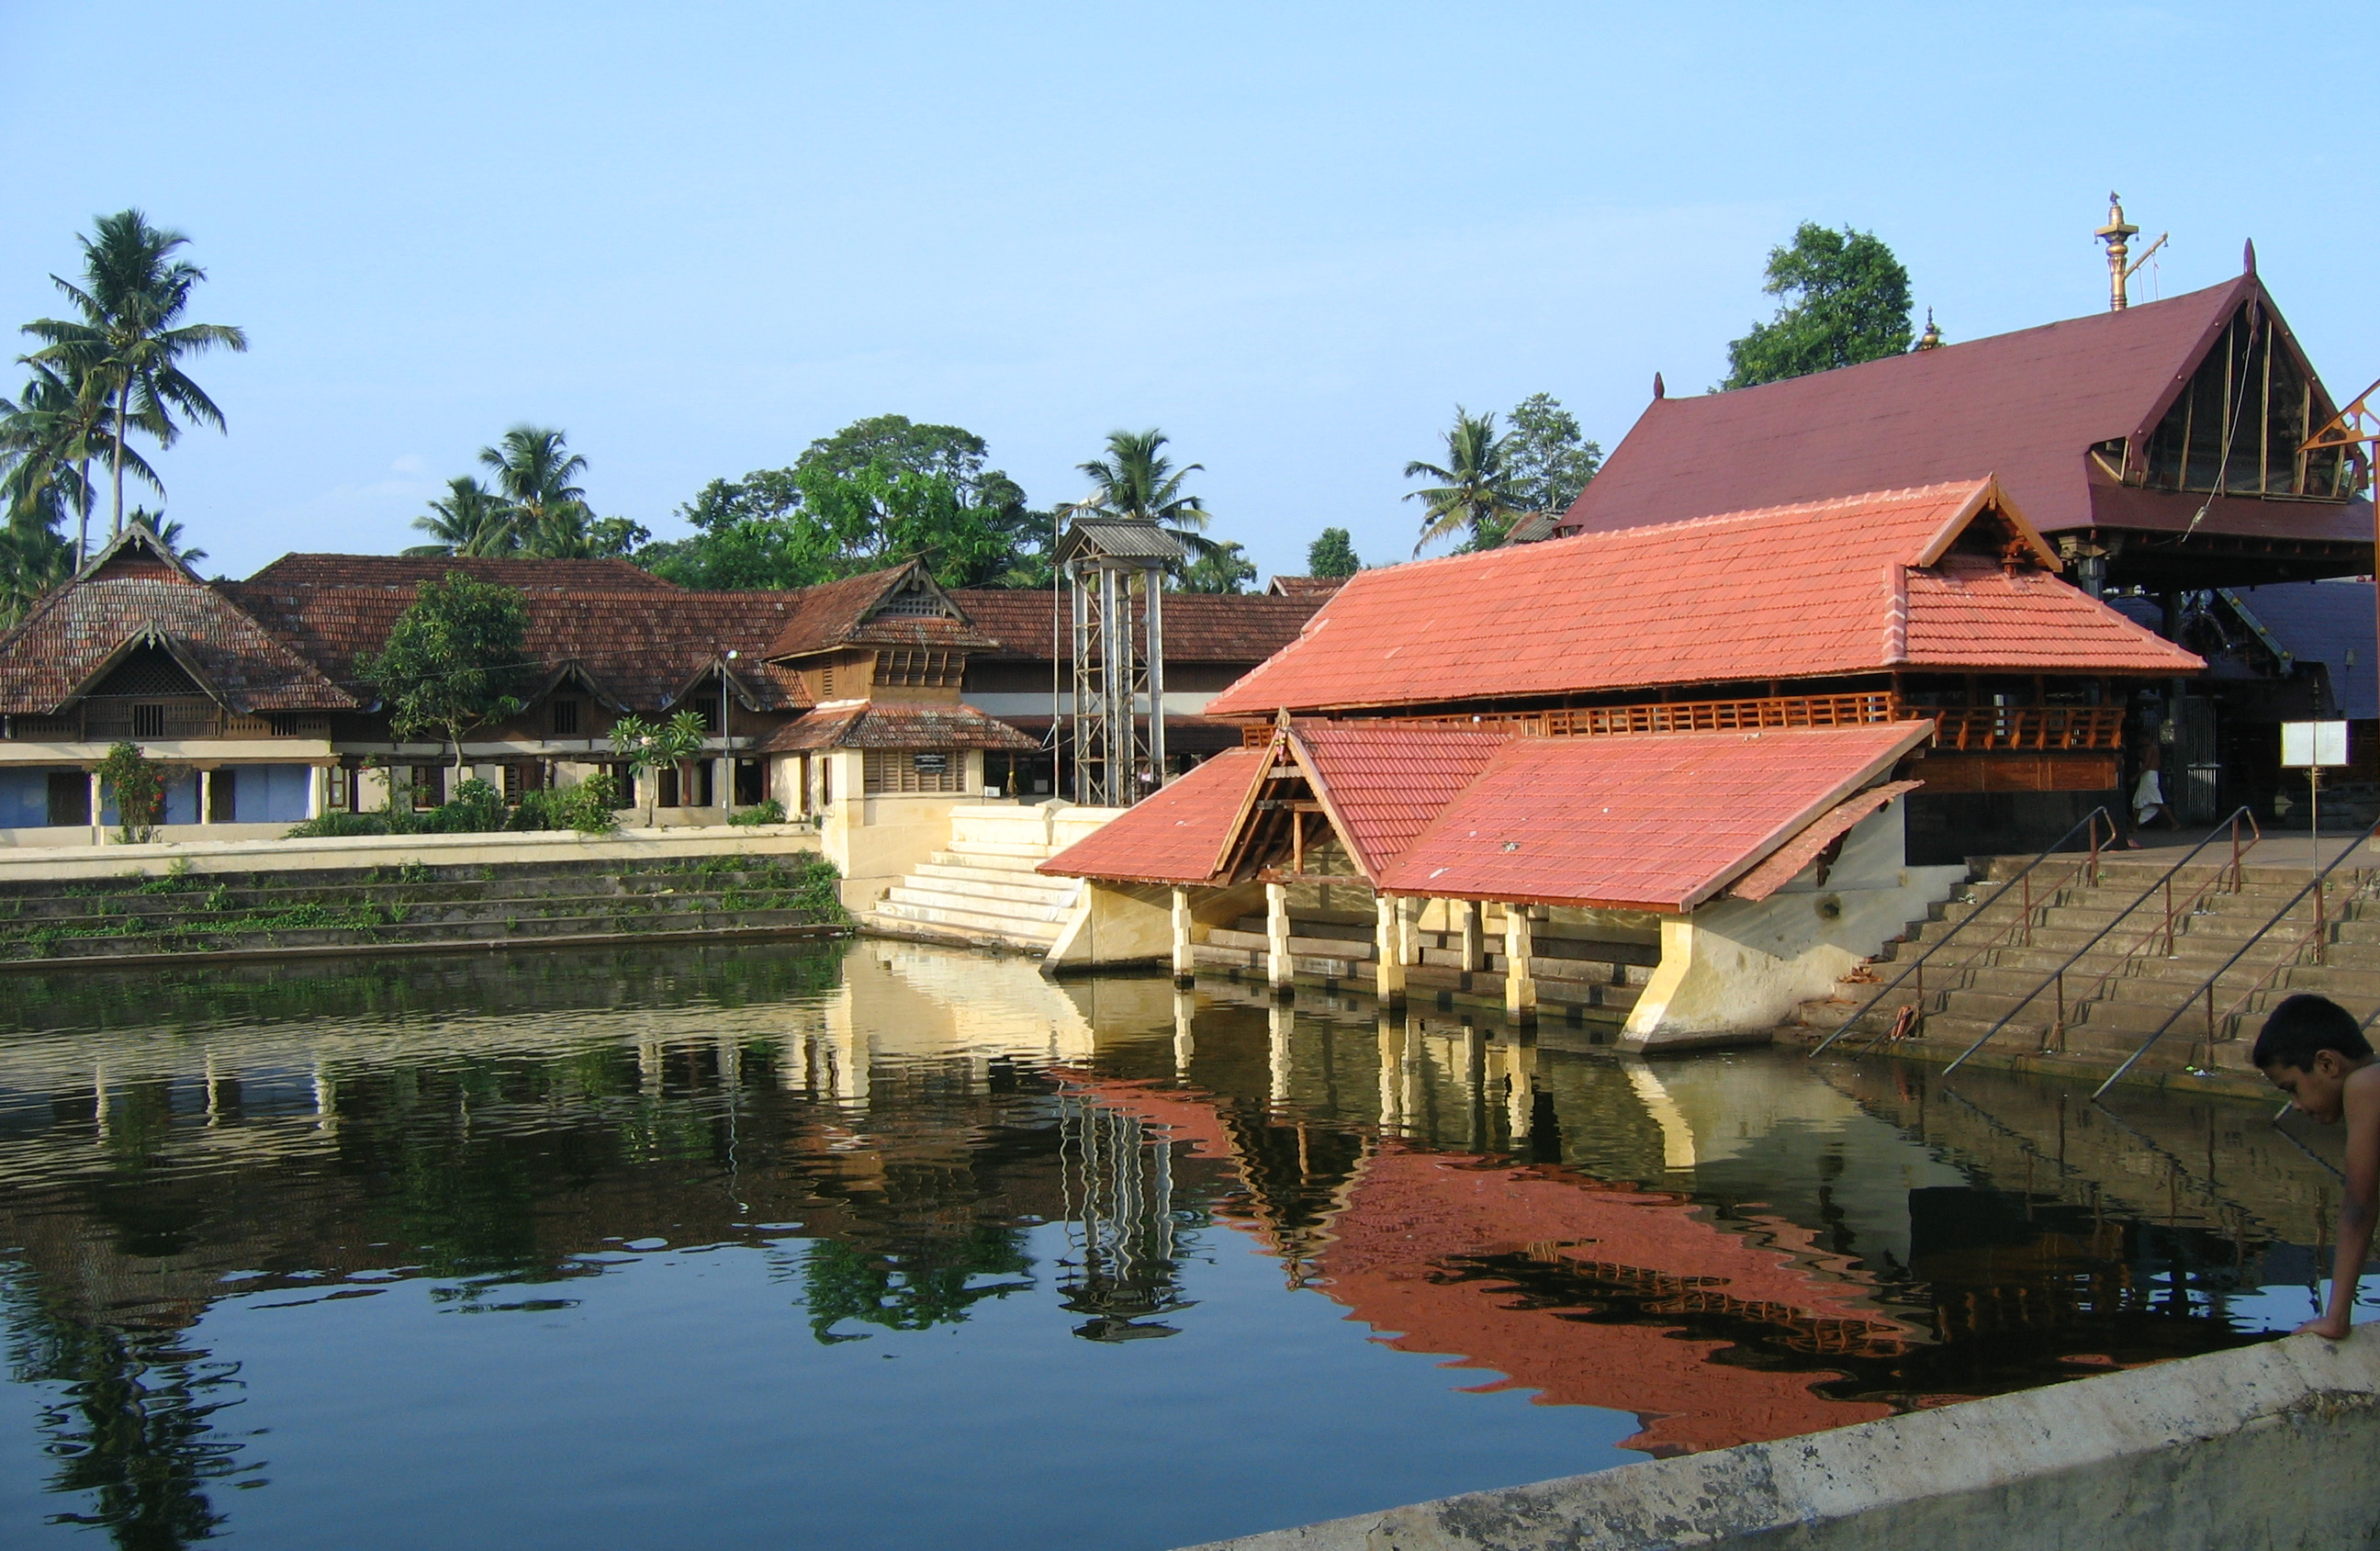 Ambalapuzha Sri Krishna Temple, Kerala